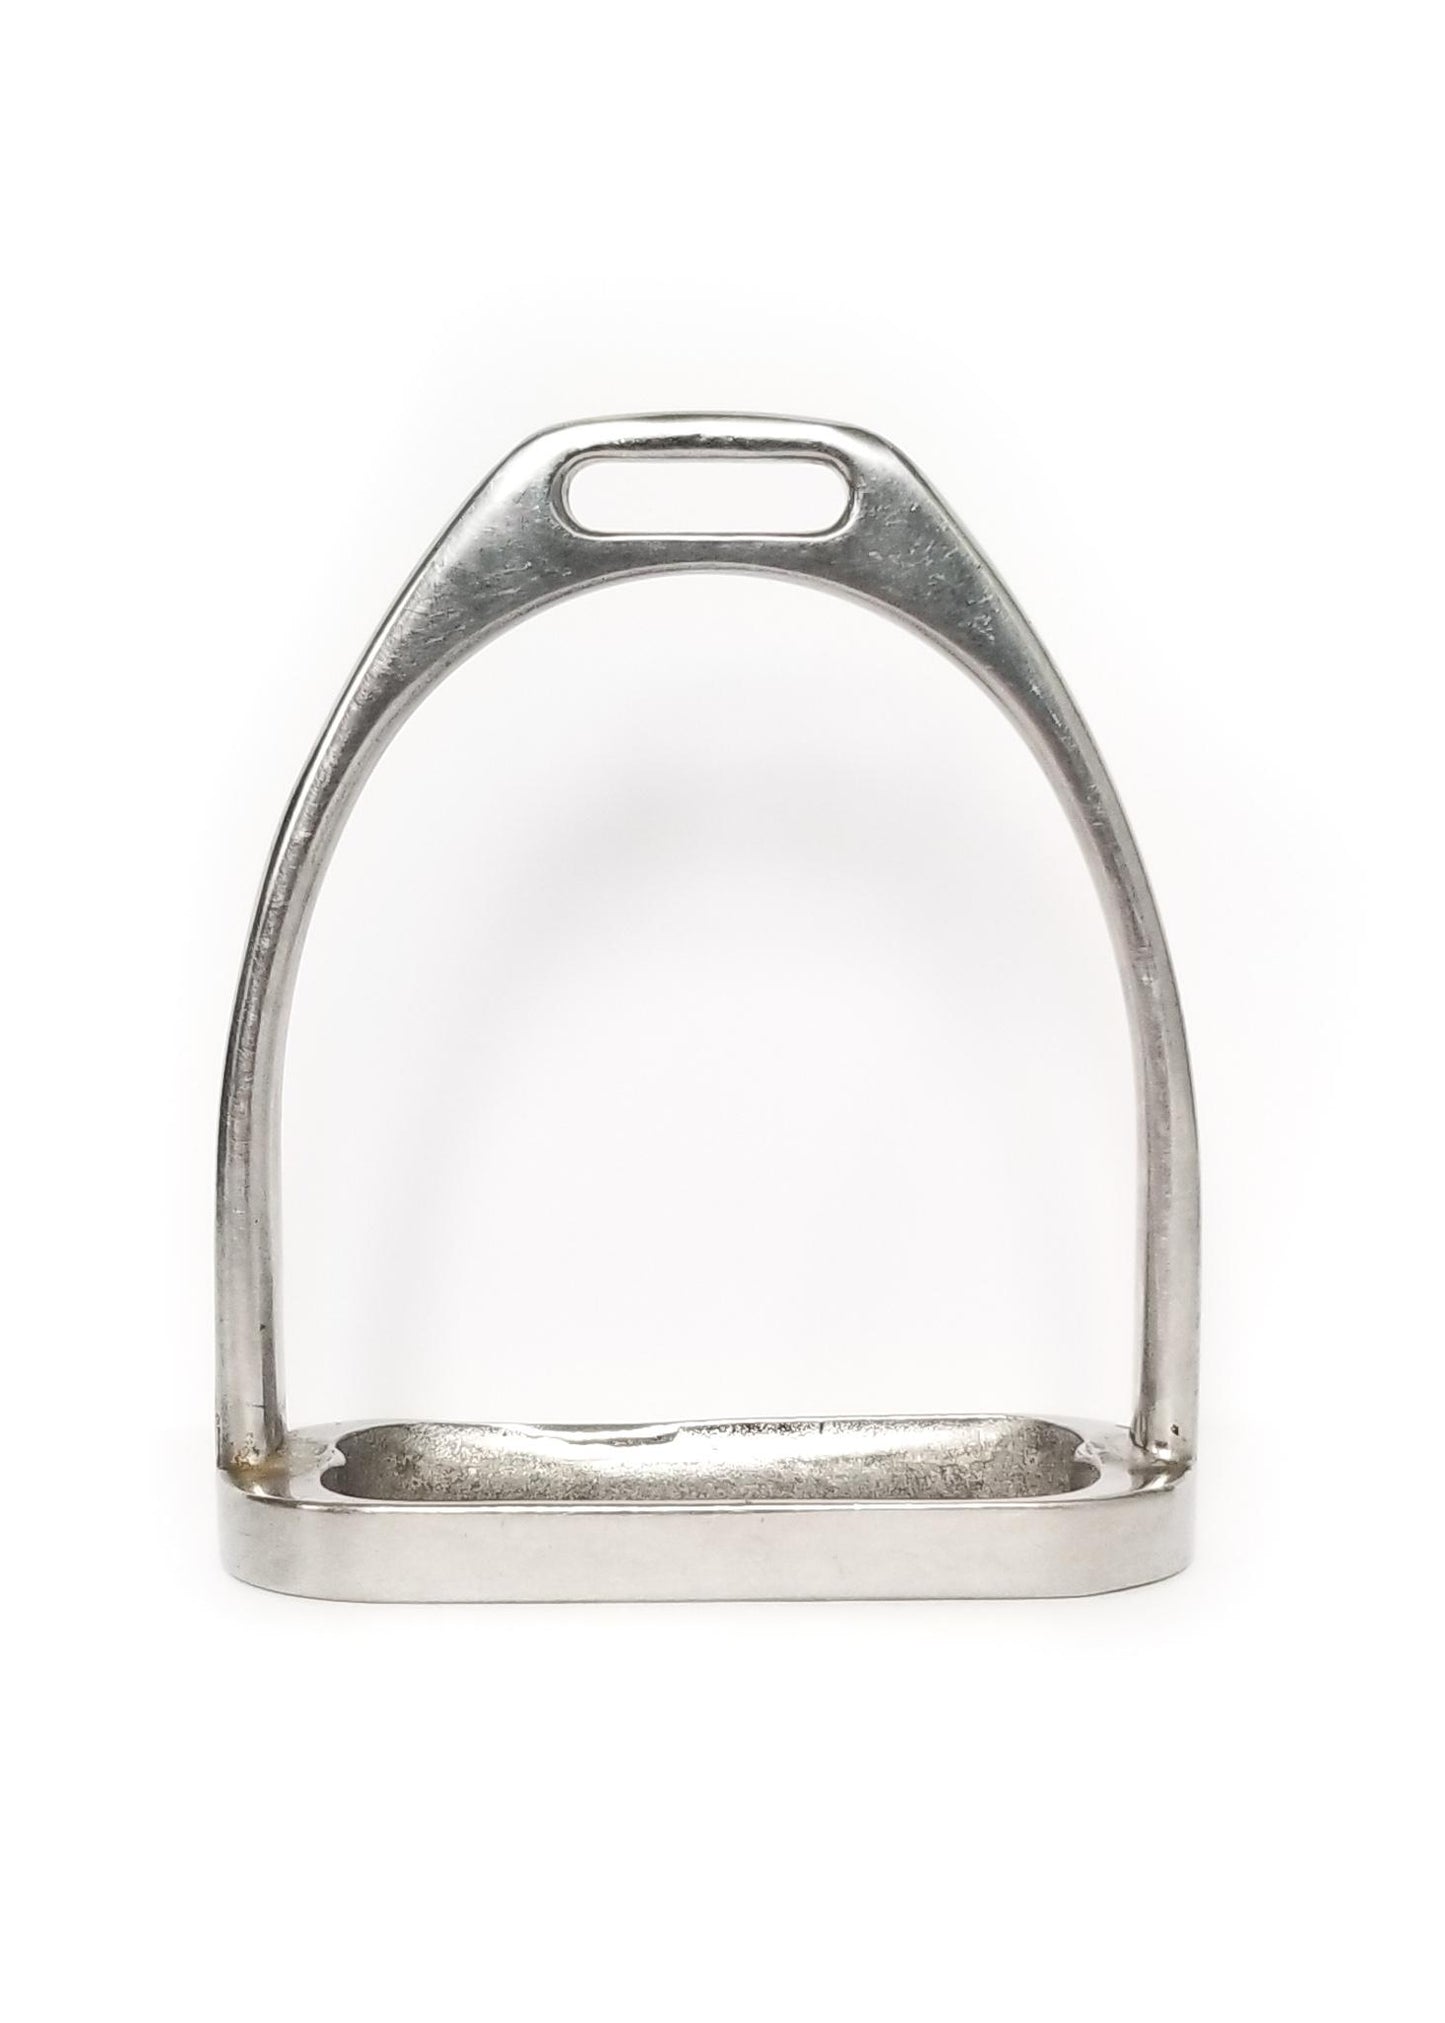 Stirrup Irons - Silver - 4.5"